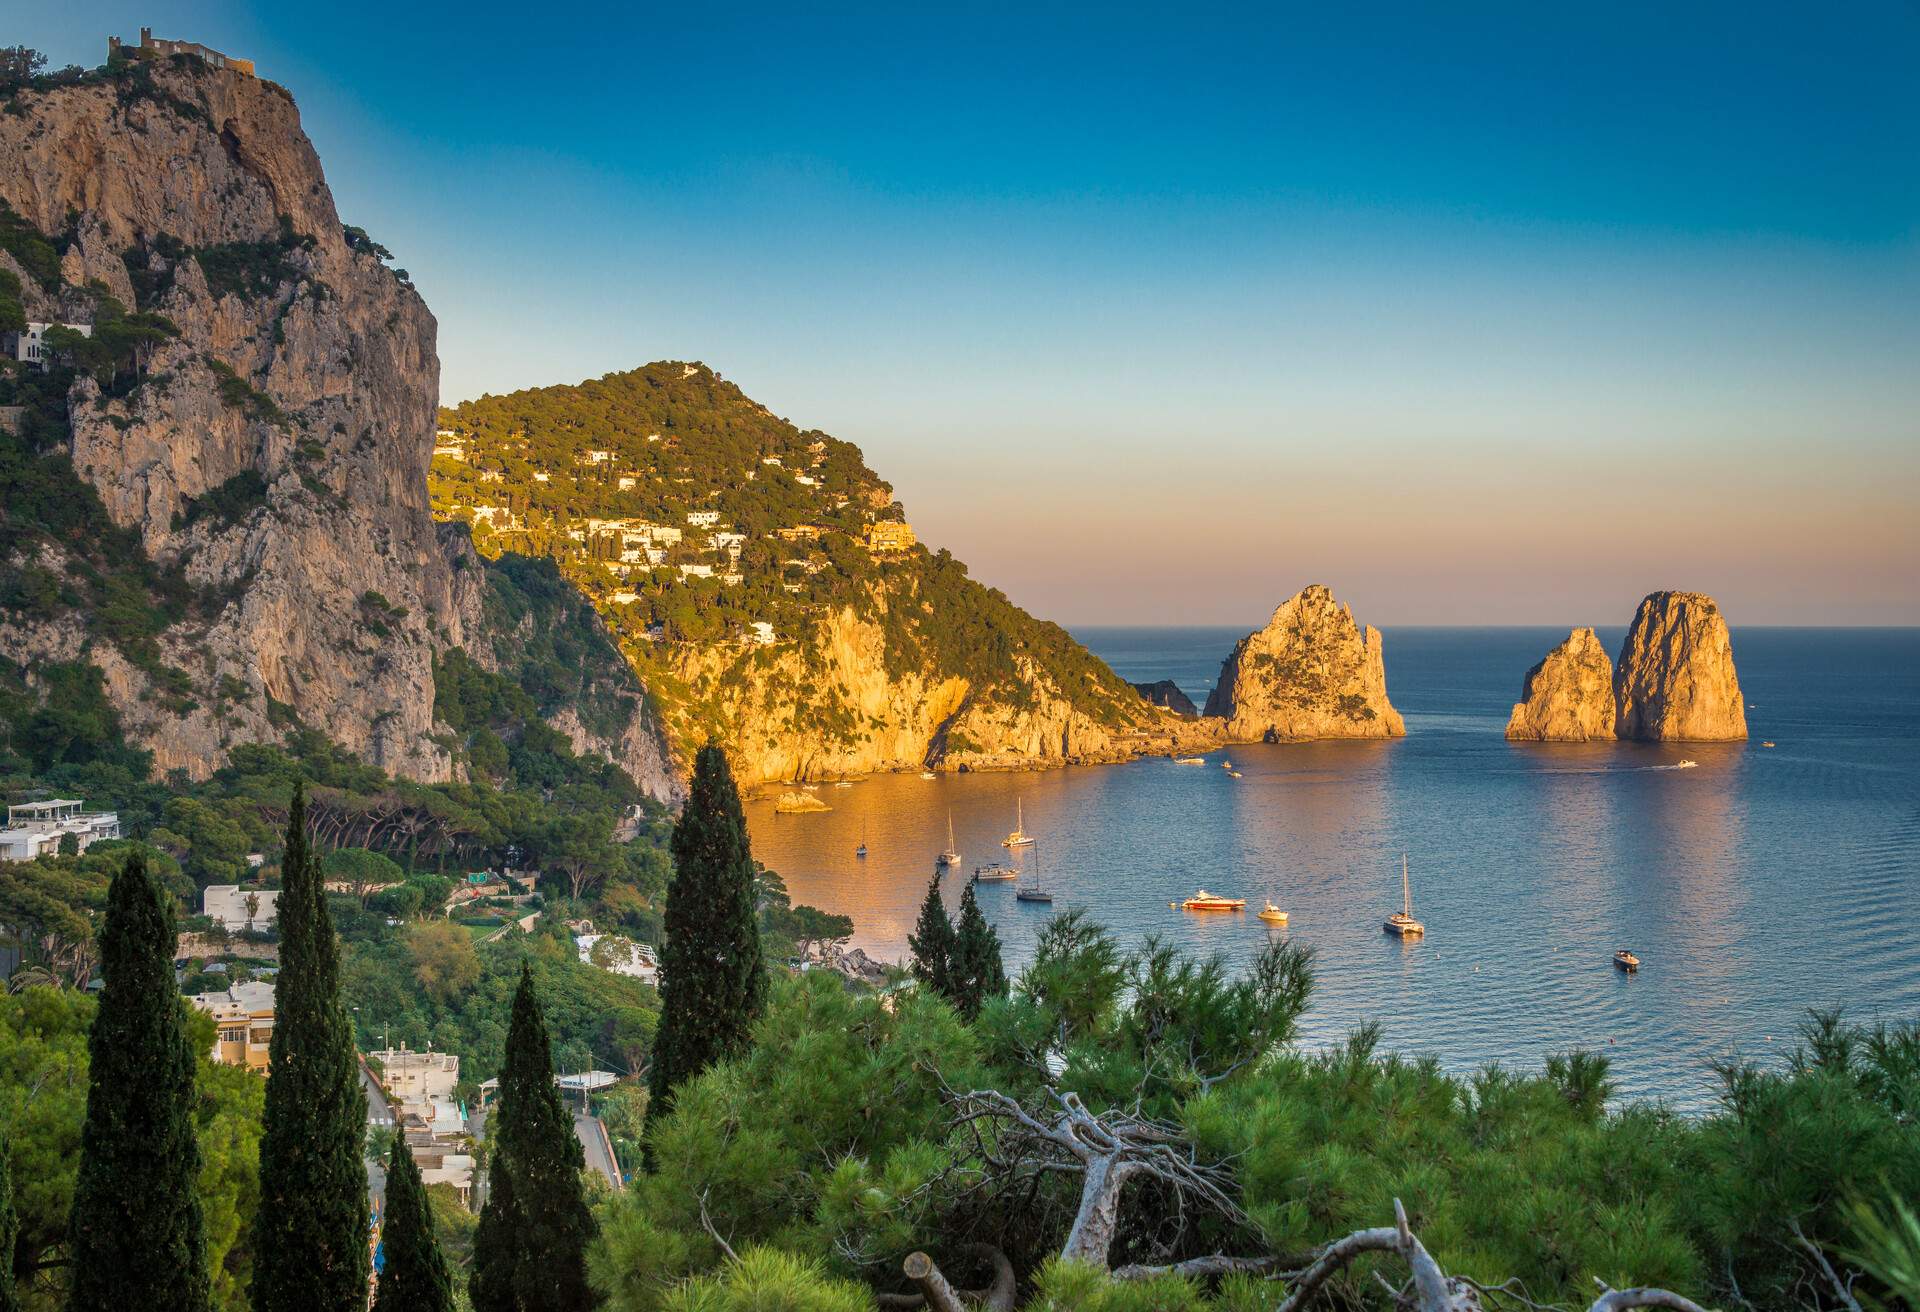 Capri, Italy - October 15, 2017: the three famous faraglioni in the Bay of Naples, off the island of Capri.